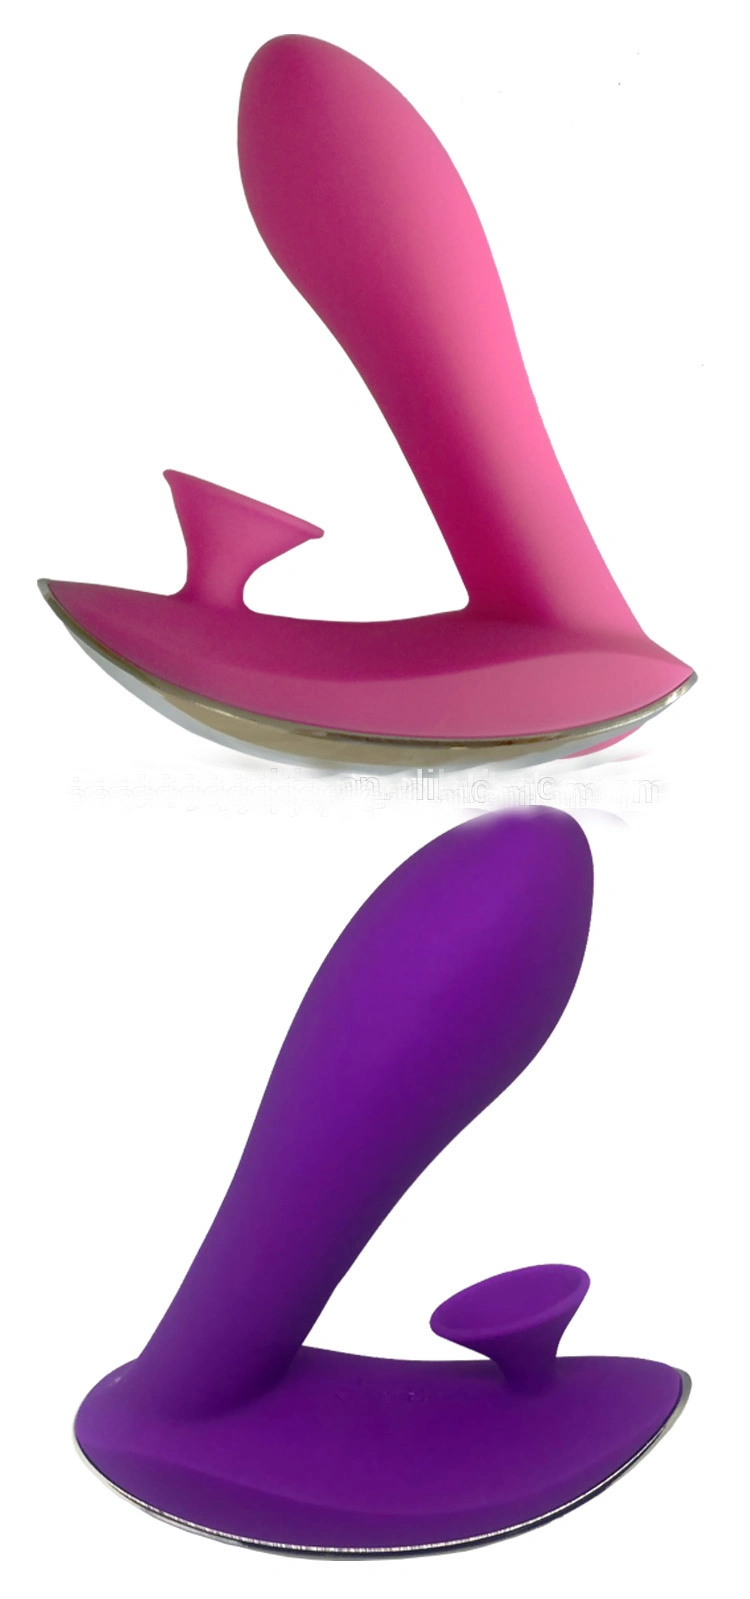 Best Selling Magic Vibrator Stimulator Clitoris Sucking for Women